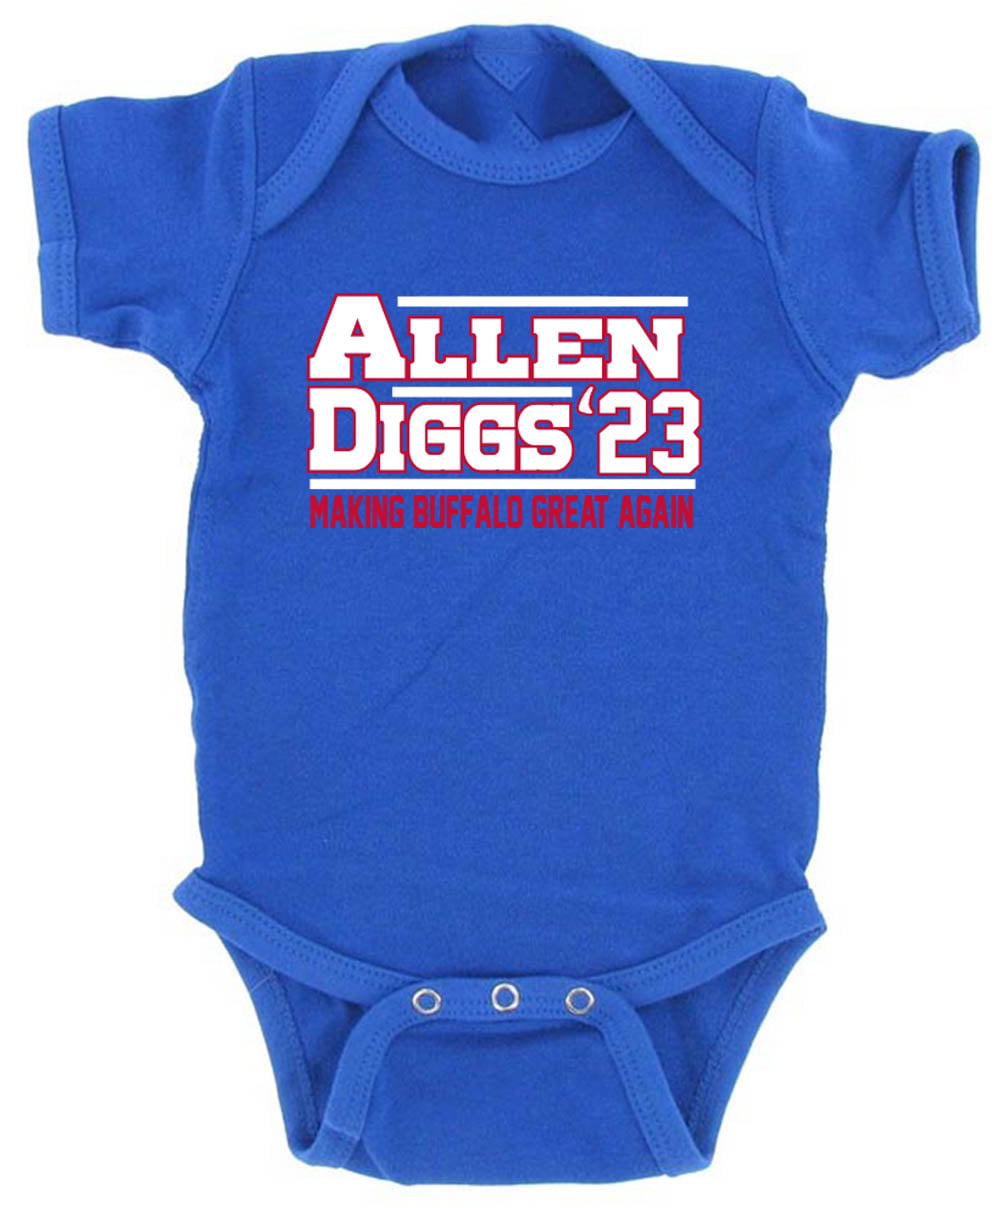 Bills Josh Allen Stefon Diggs 23 Baby 1 Piece - Walmart.com